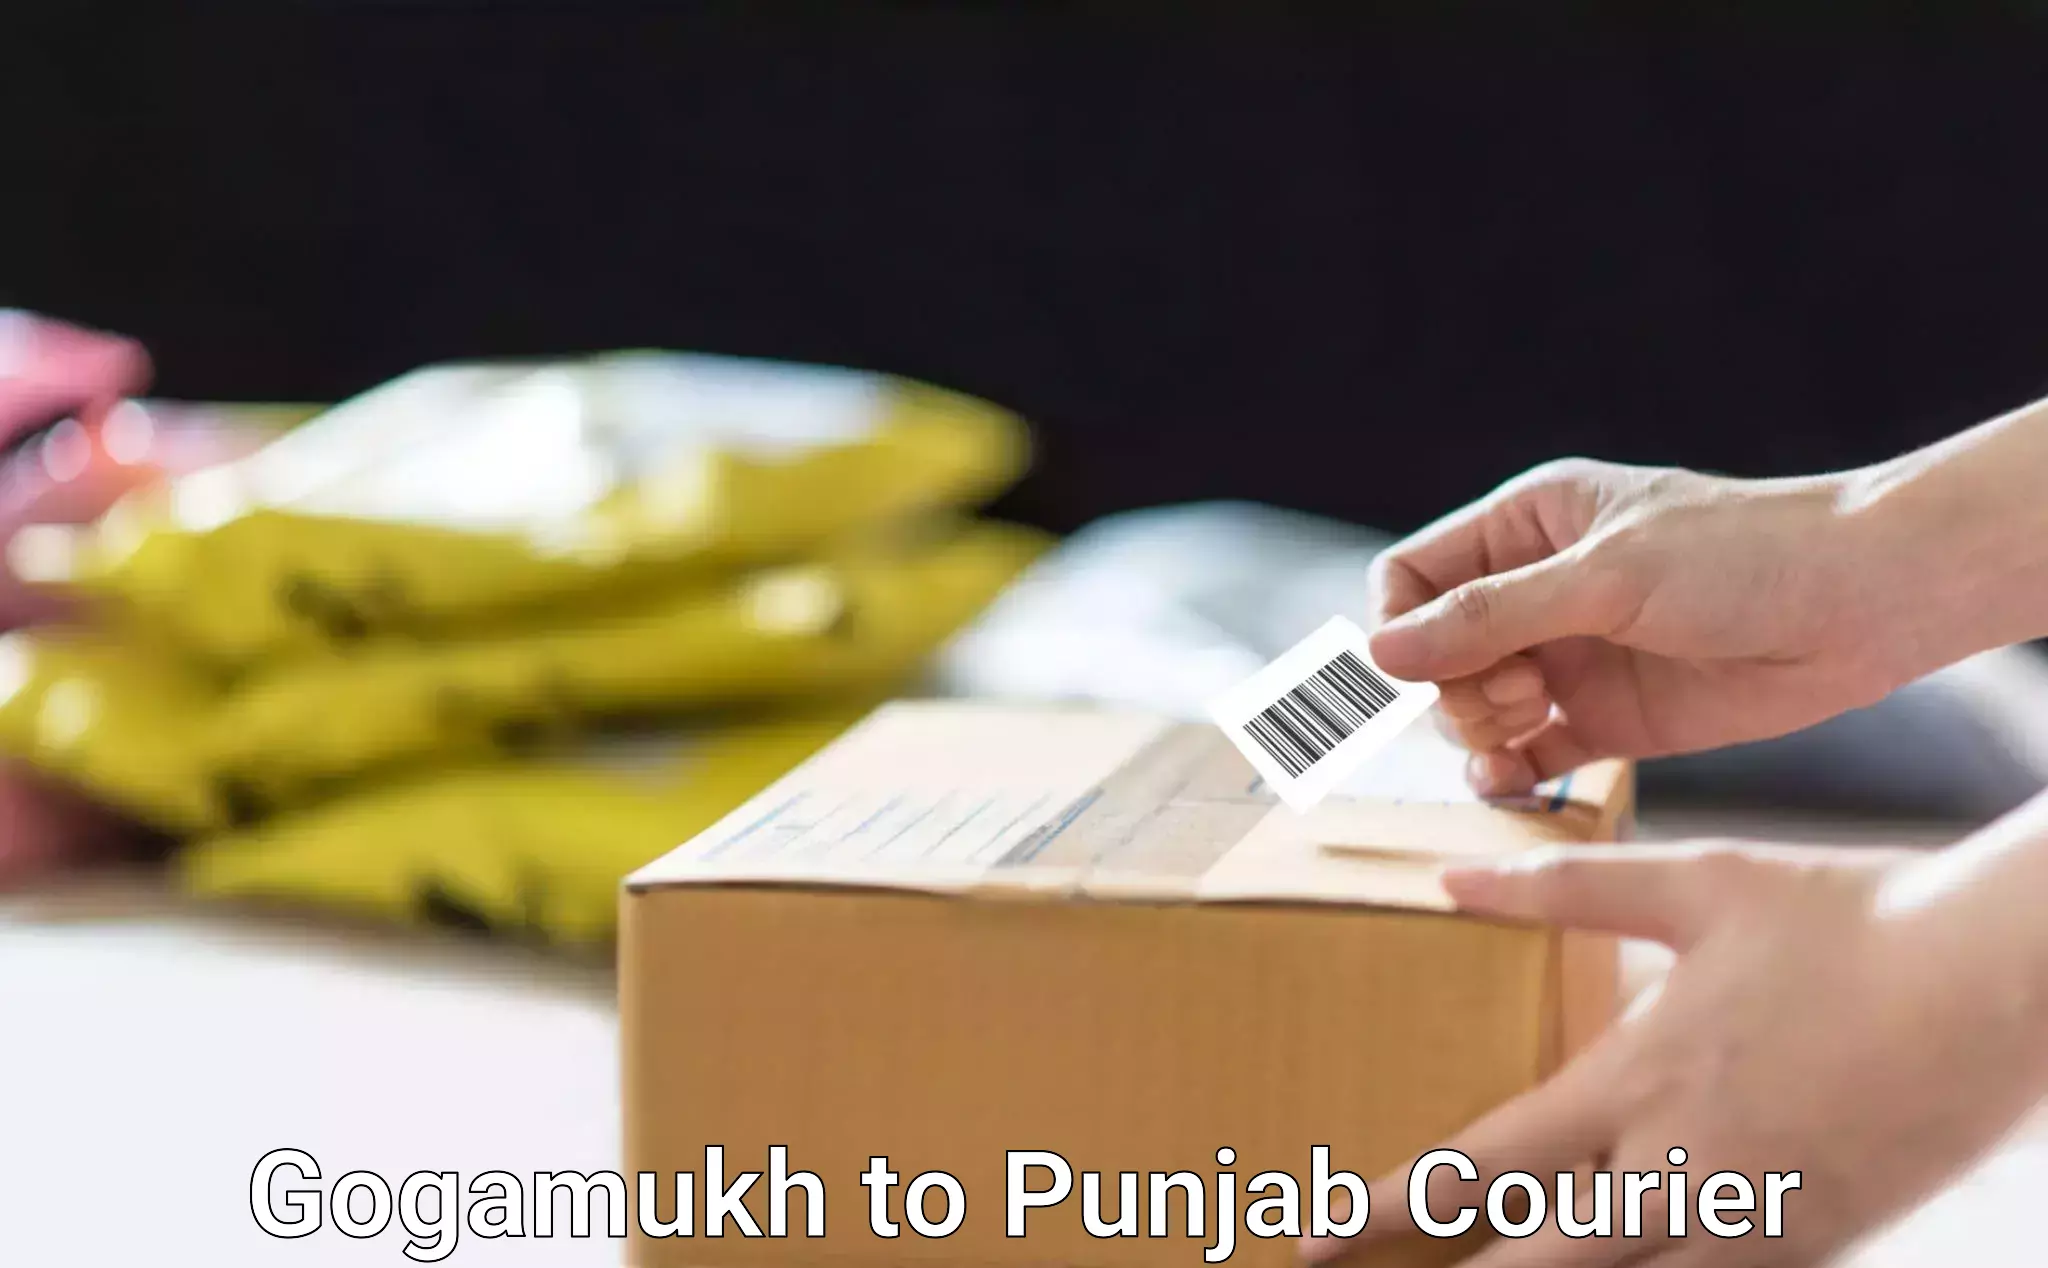 Courier service partnerships in Gogamukh to Anandpur Sahib